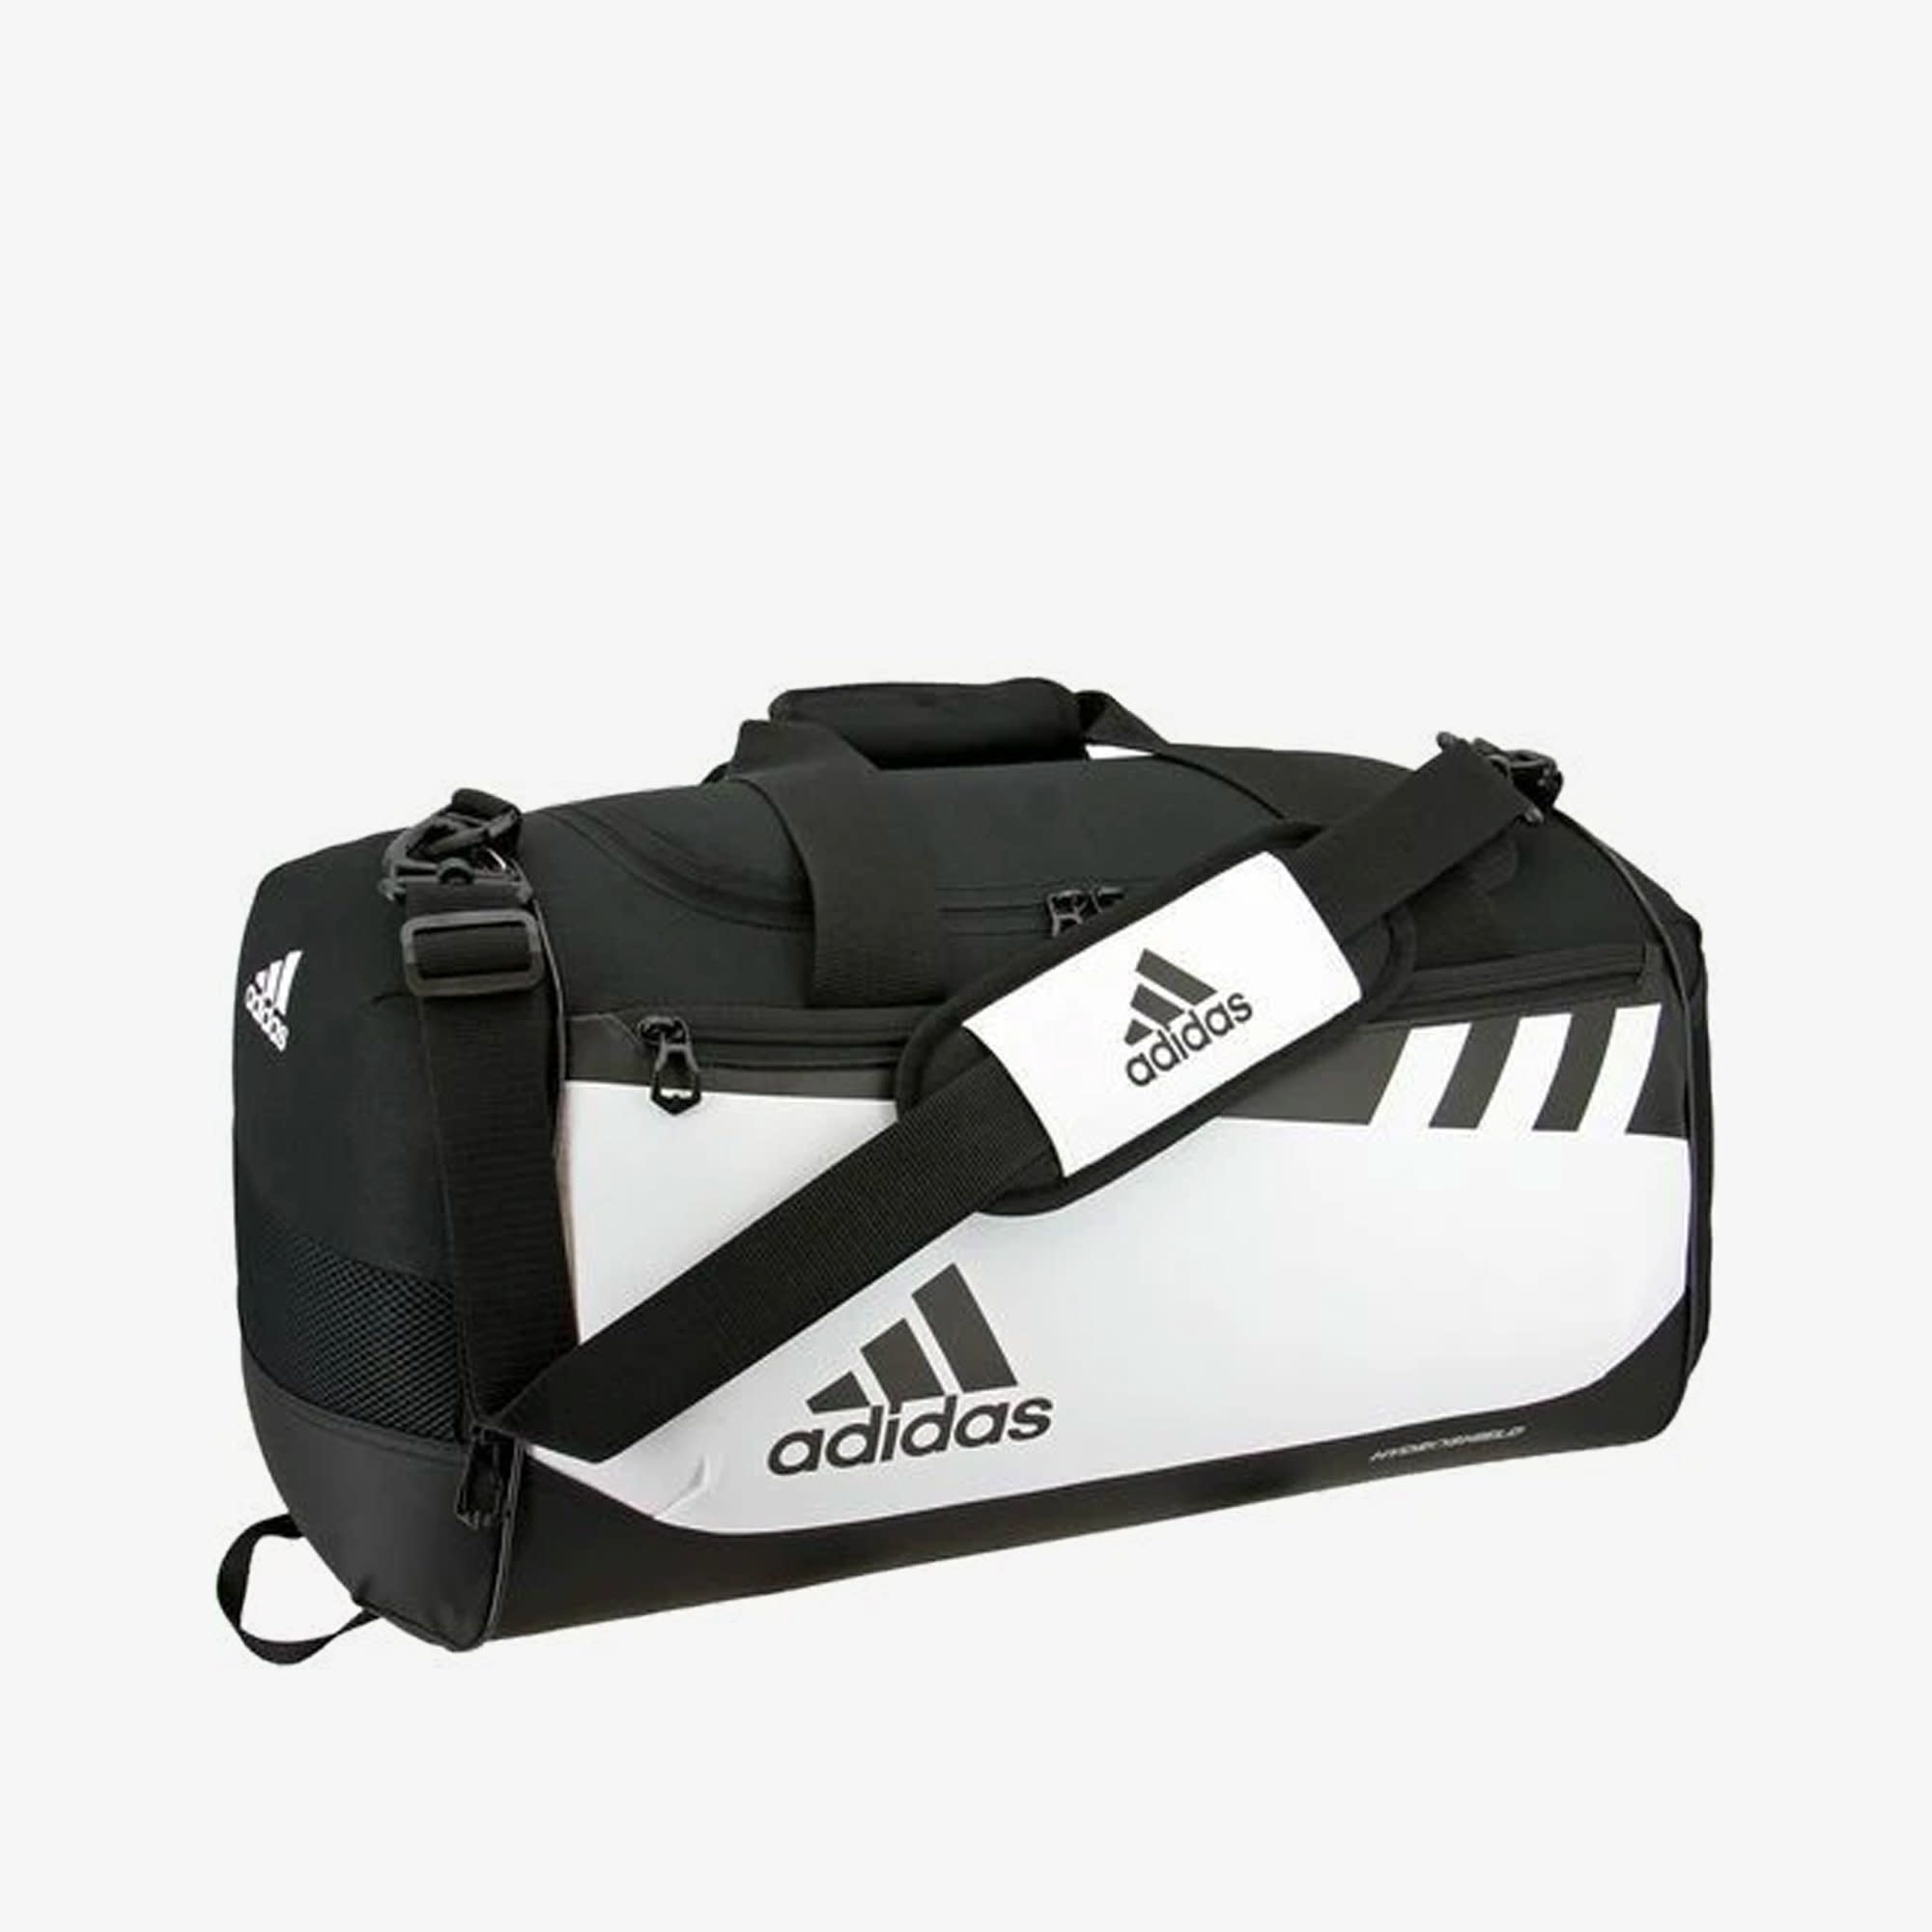 adidas Team Issue Duffel Bag - Small Soccerium